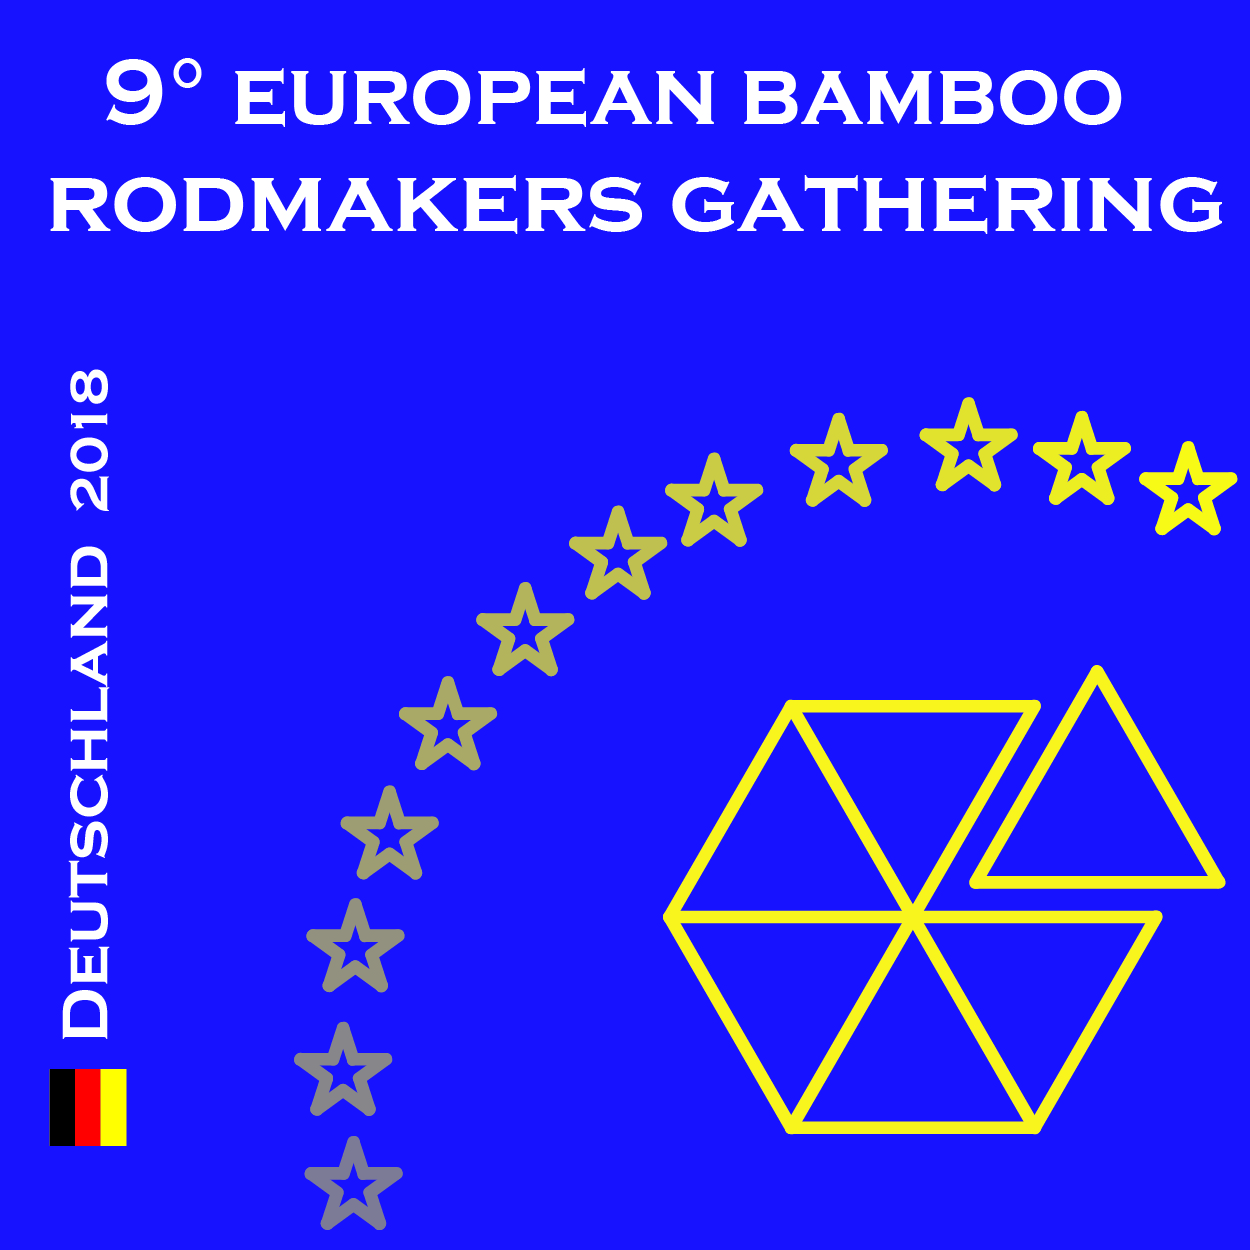 European rodmakers